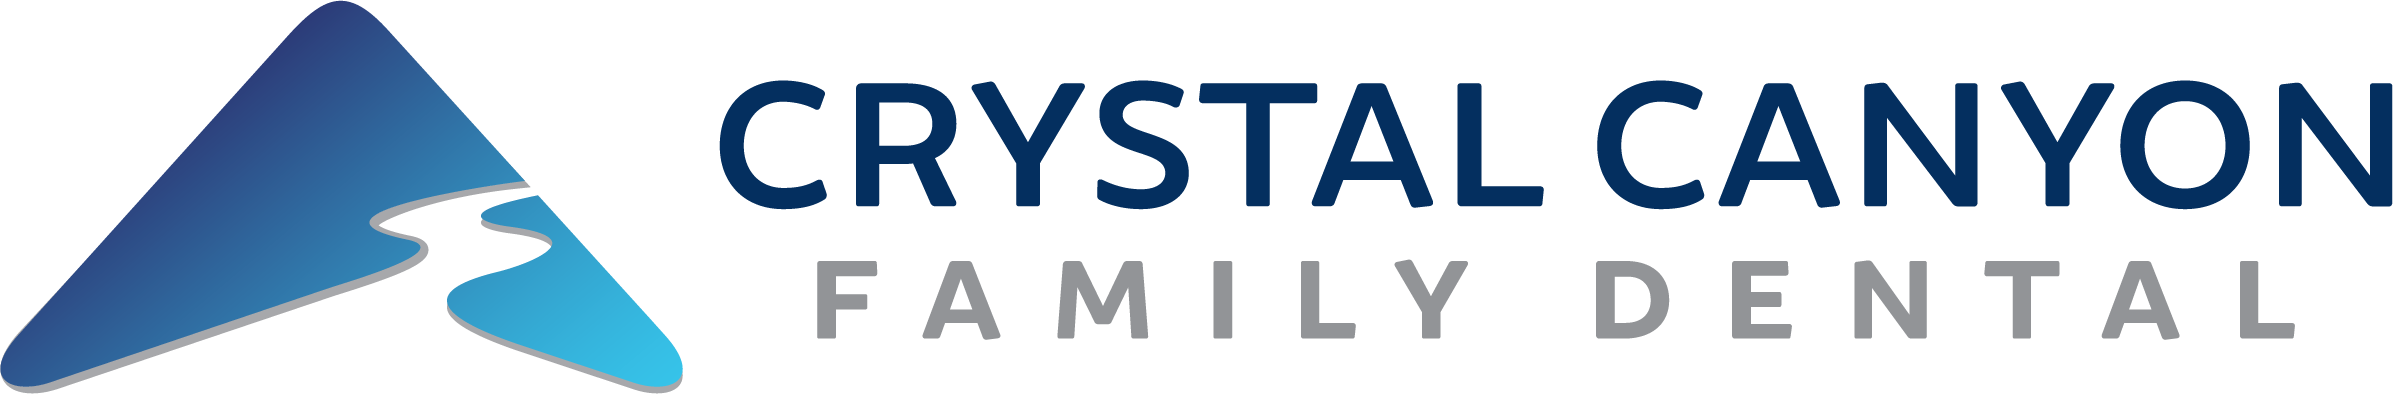 Crystal Canyon Family Dental